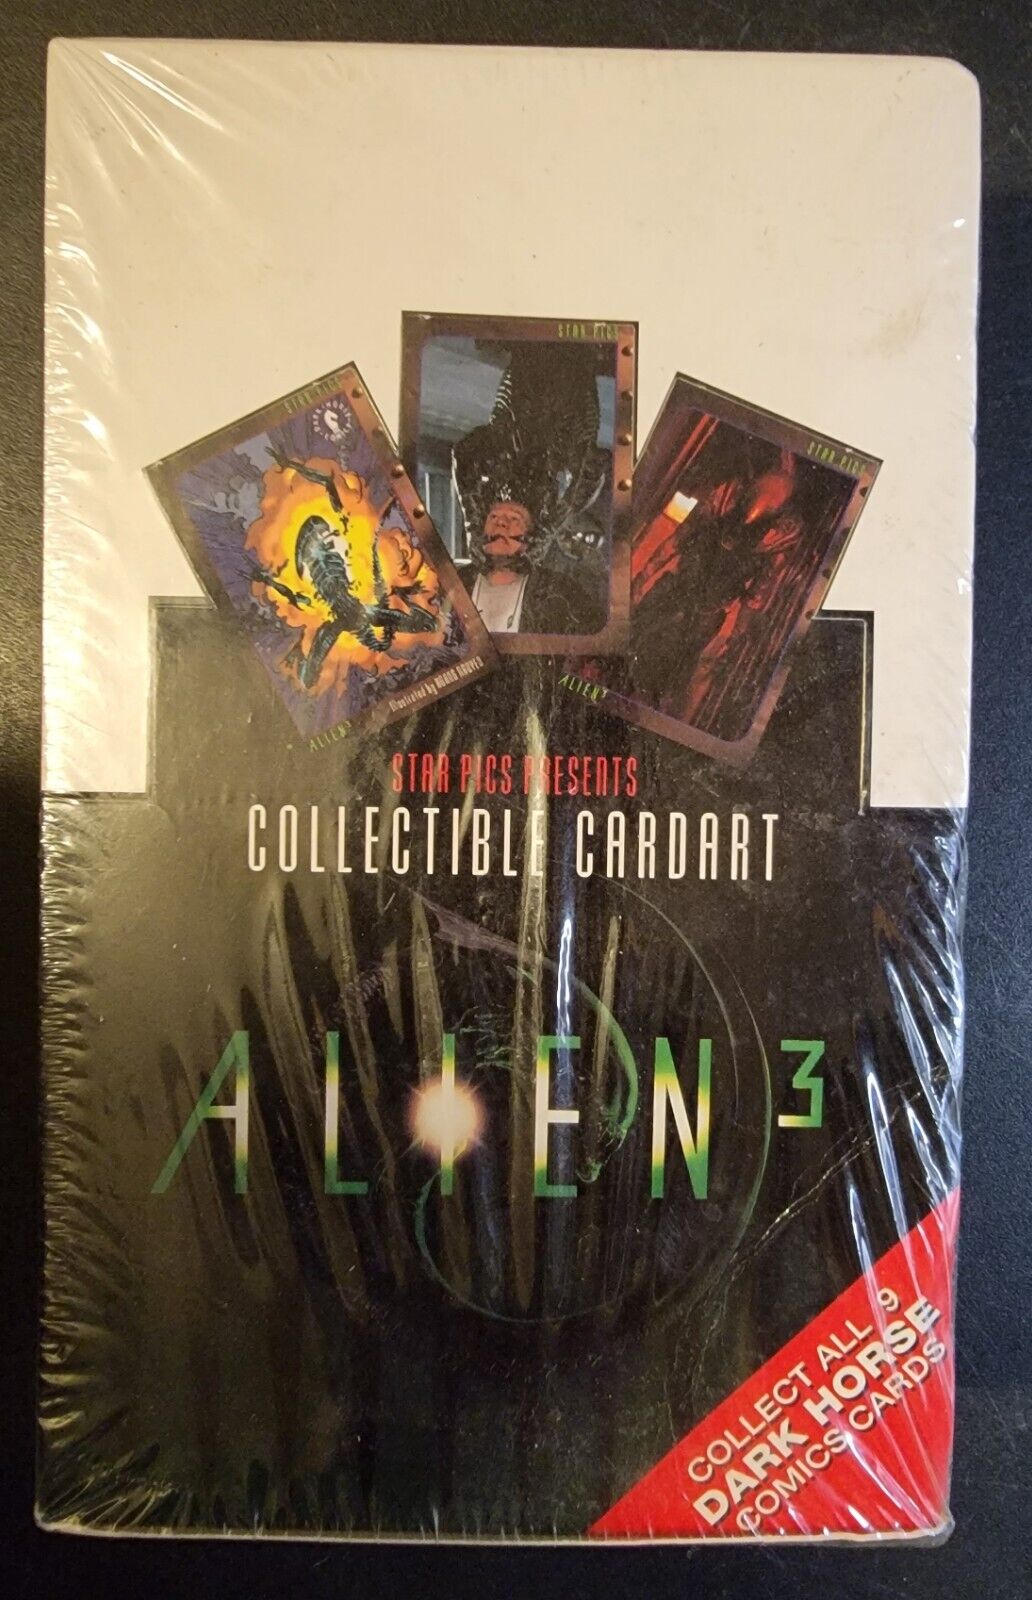 SEALED BOX Alien 3 Trading Cards 36 packs